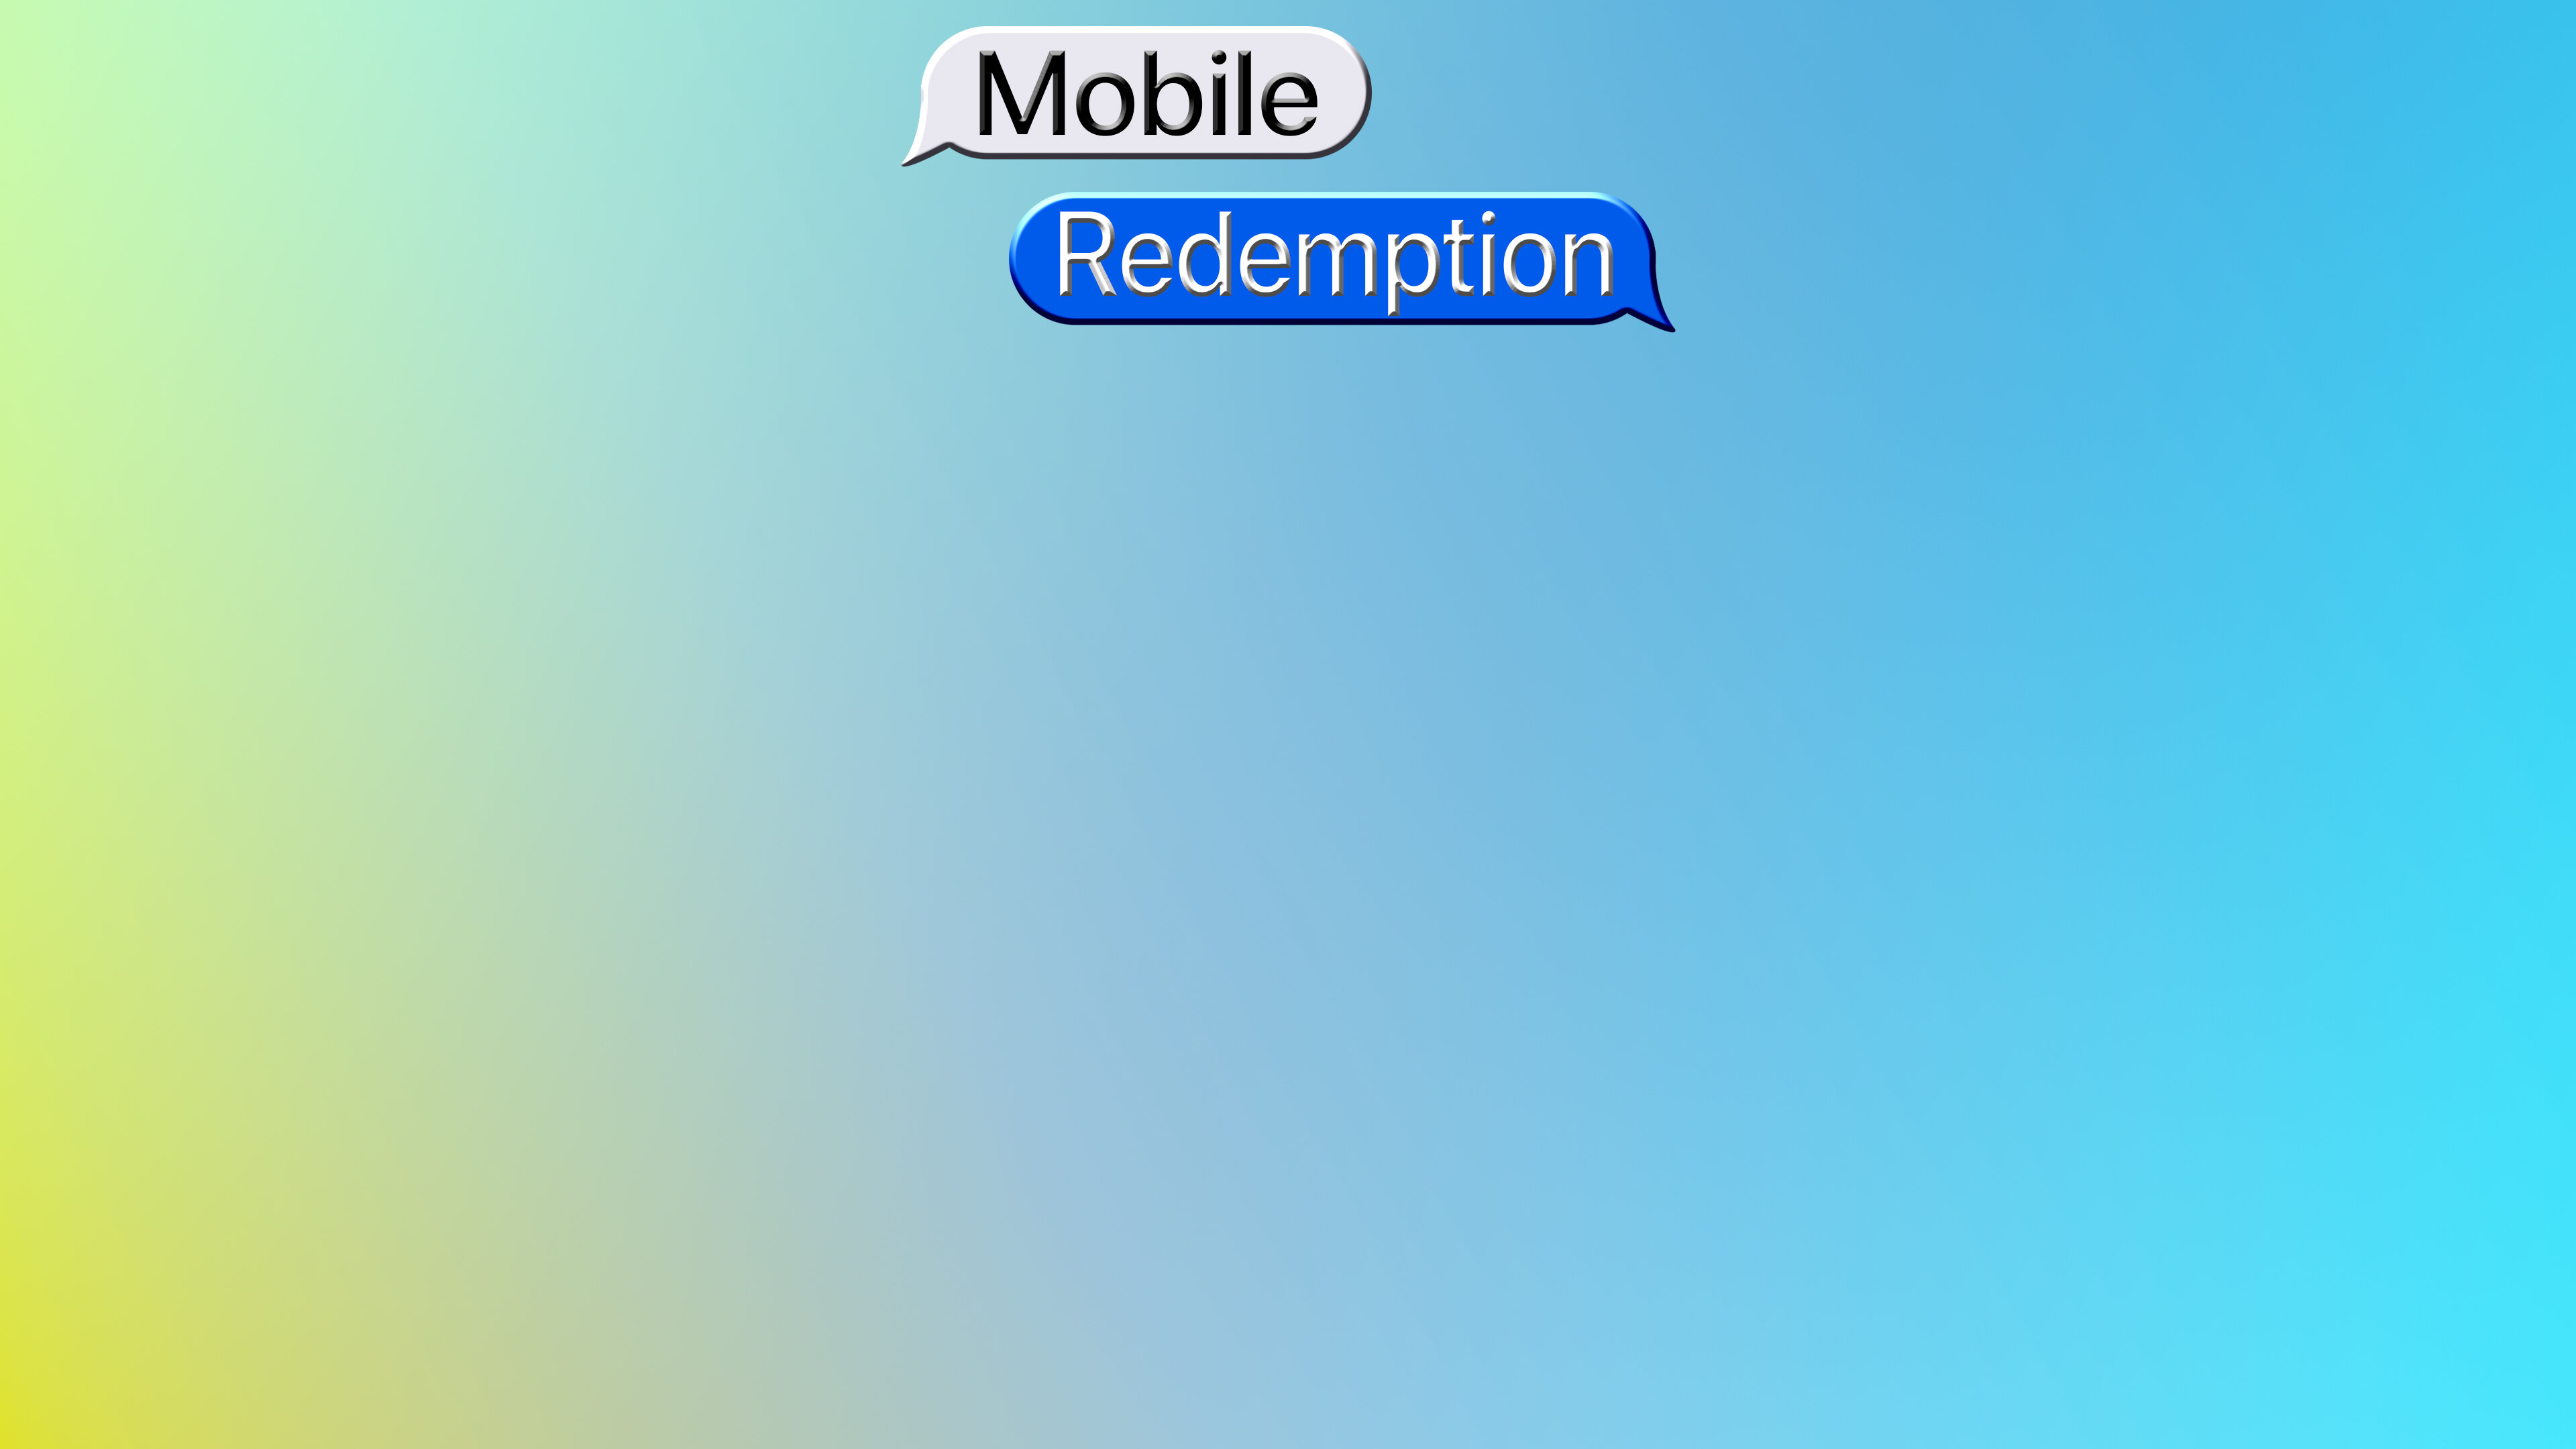 Mobile Redemption